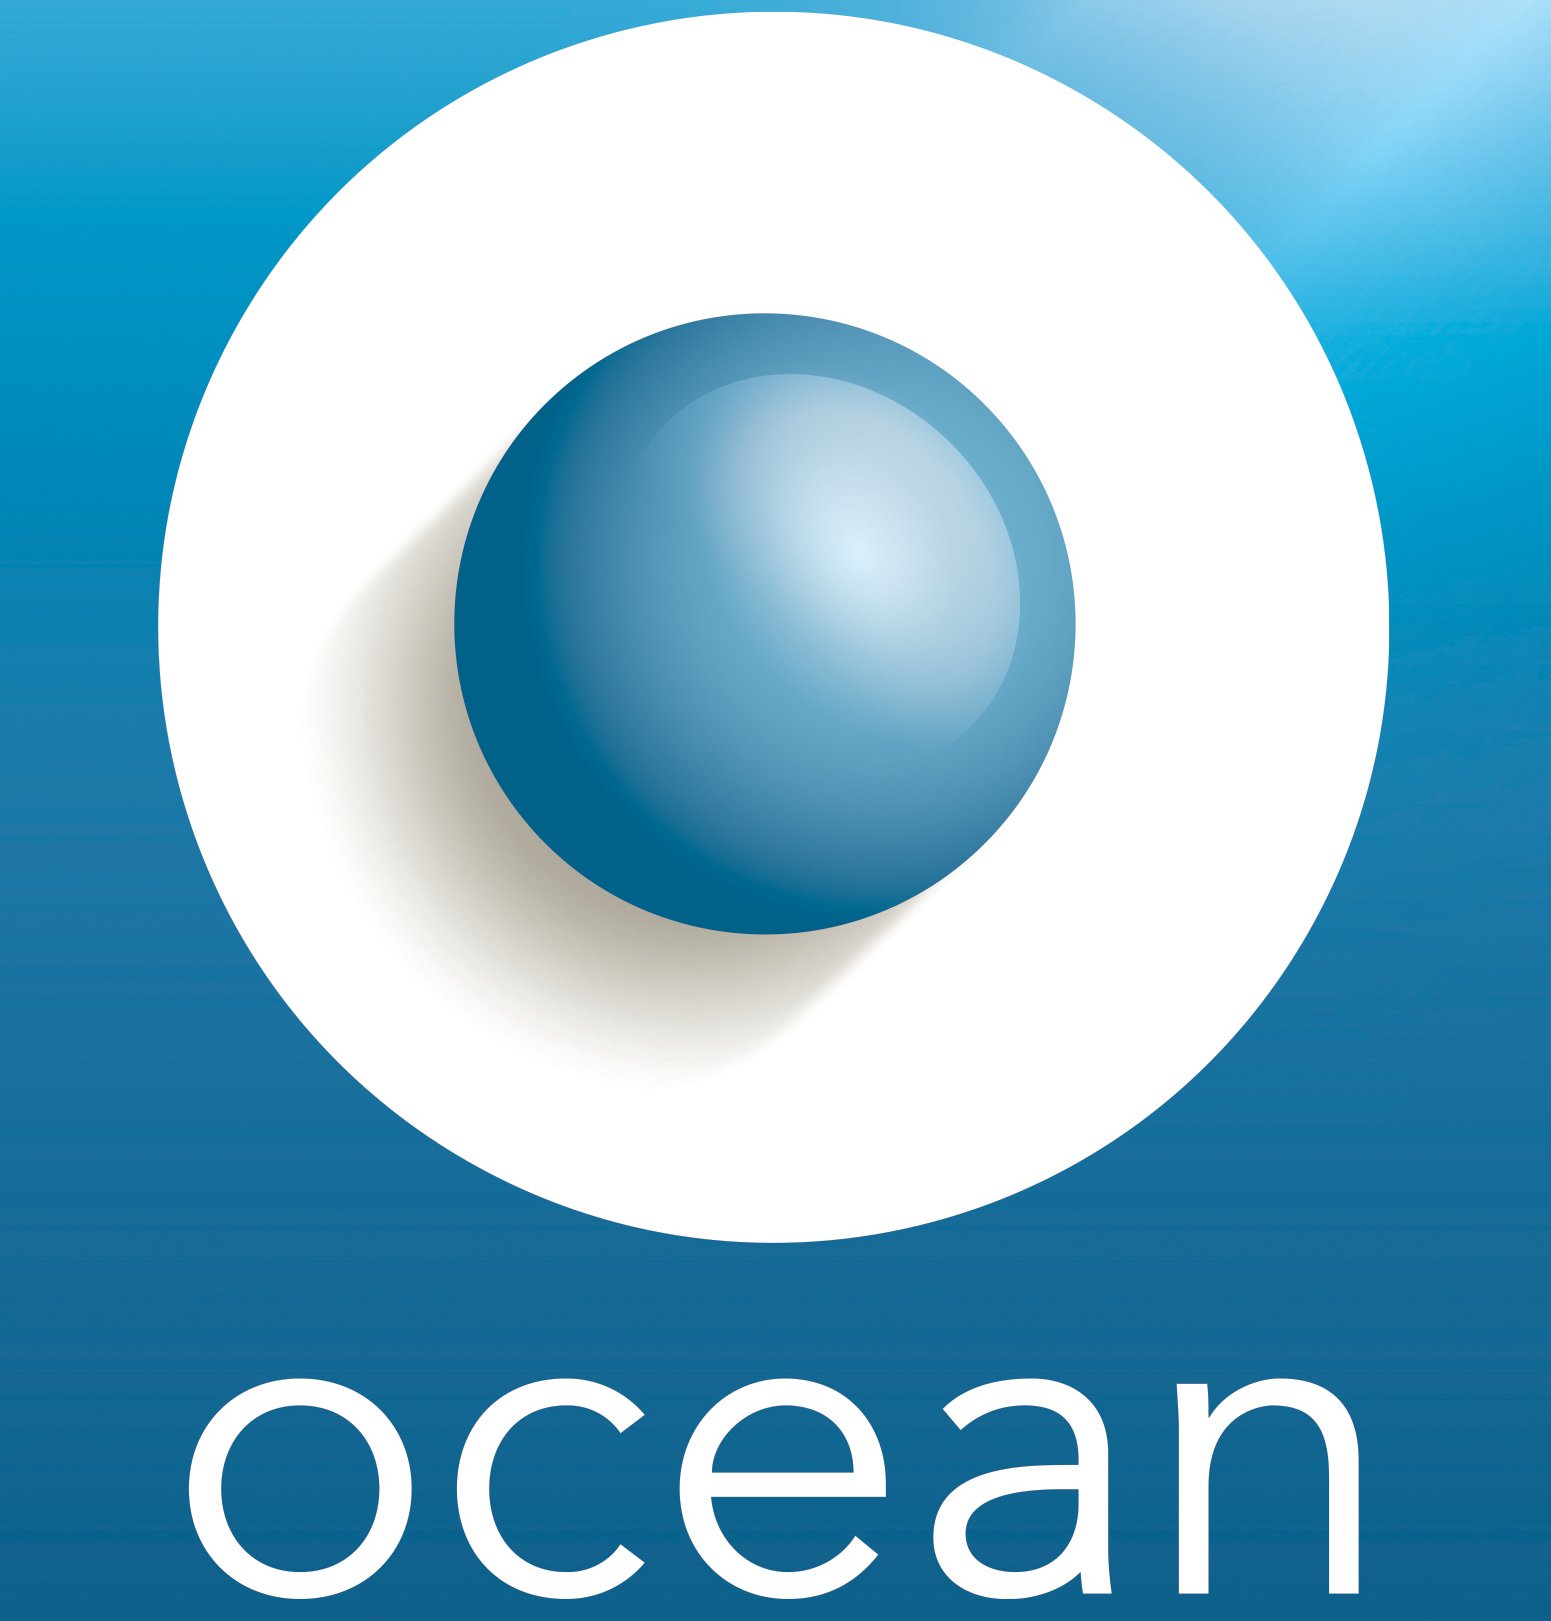 Ocean logo.jpg